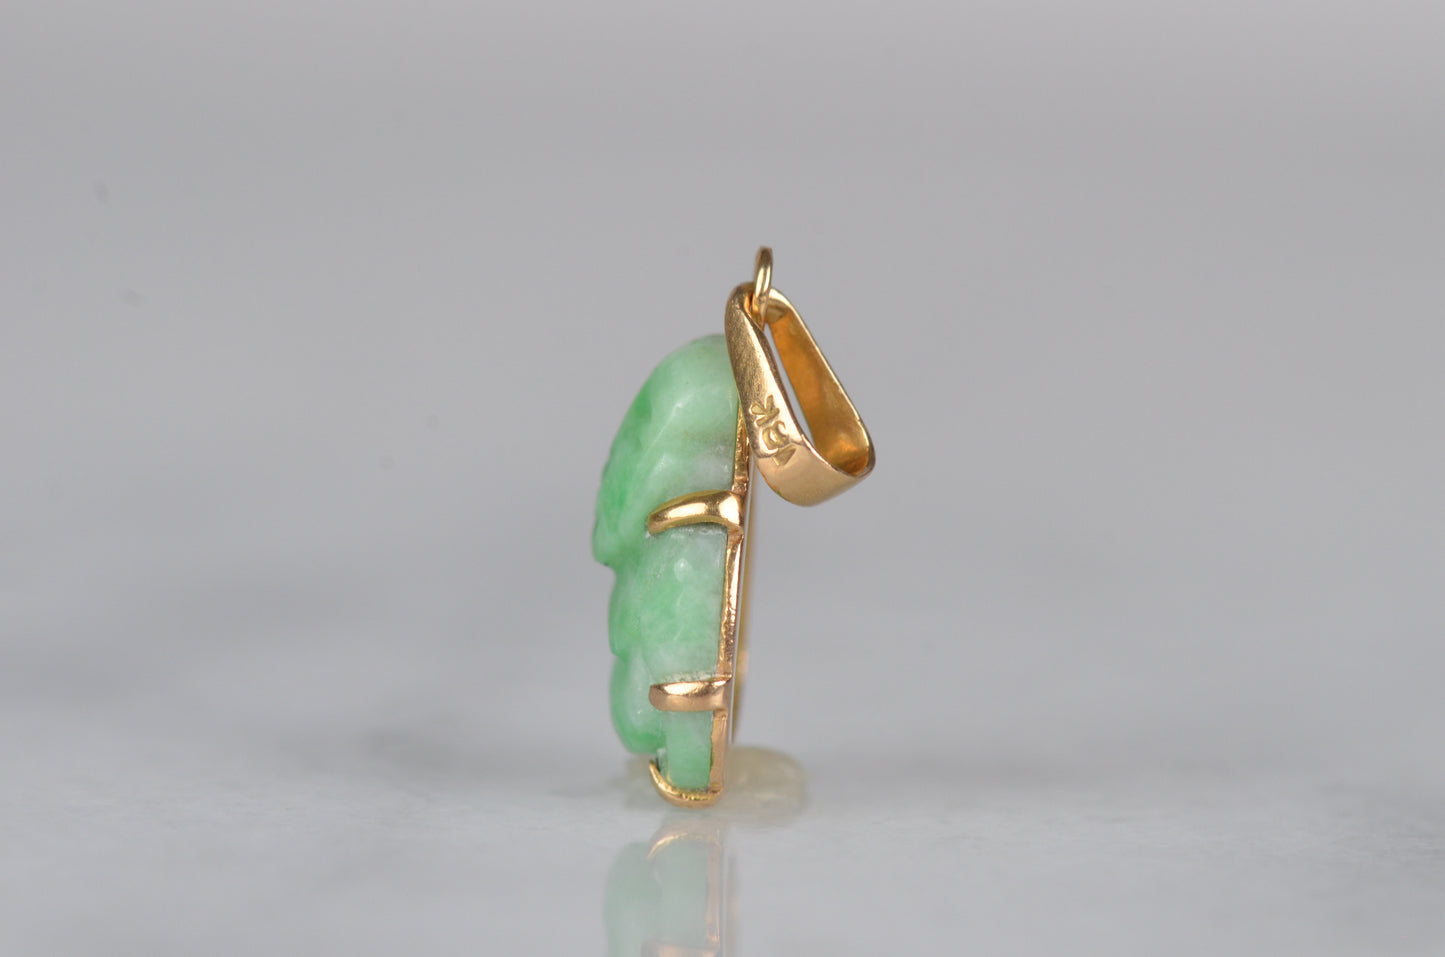 Charming Vintage Jade Buddha Pendant